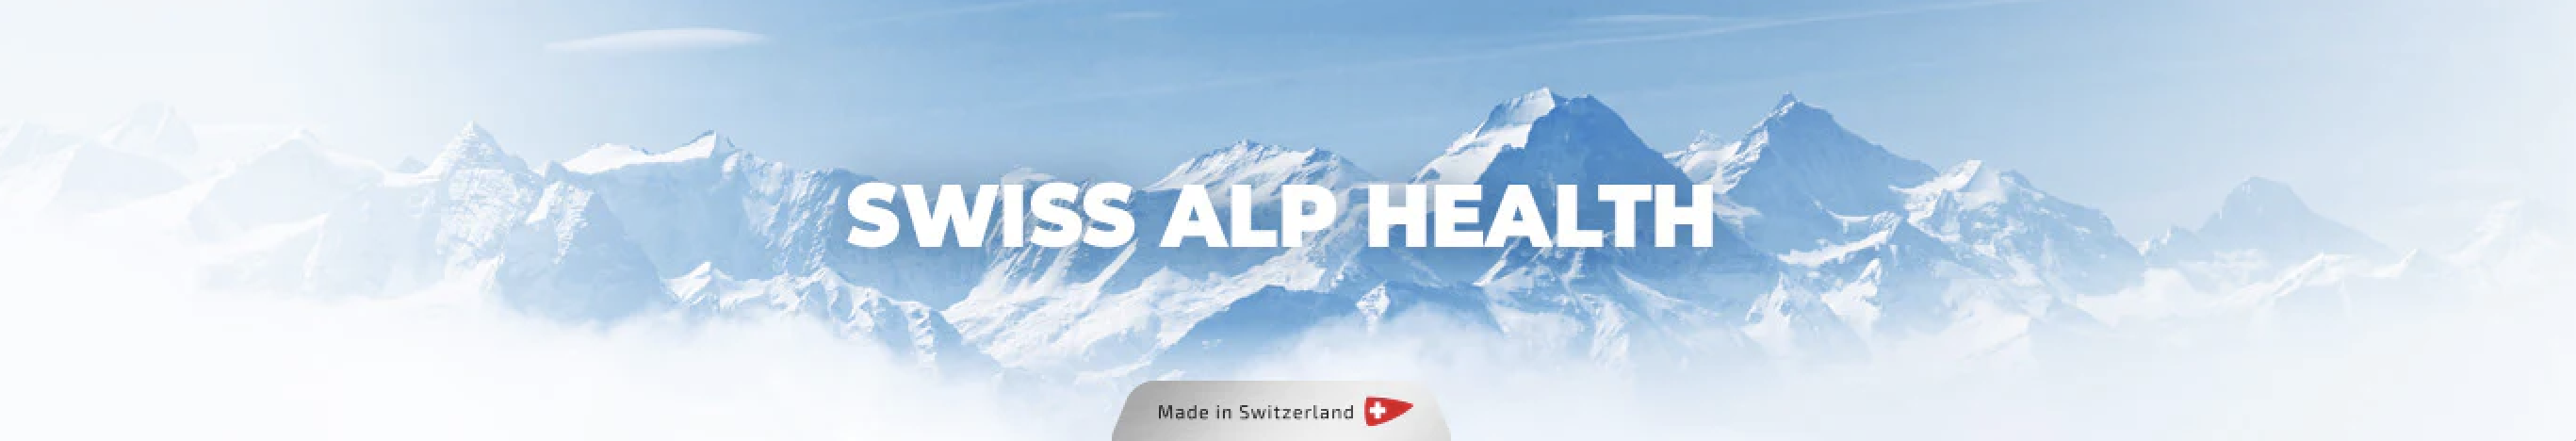 Swiss Alp Health  kanela